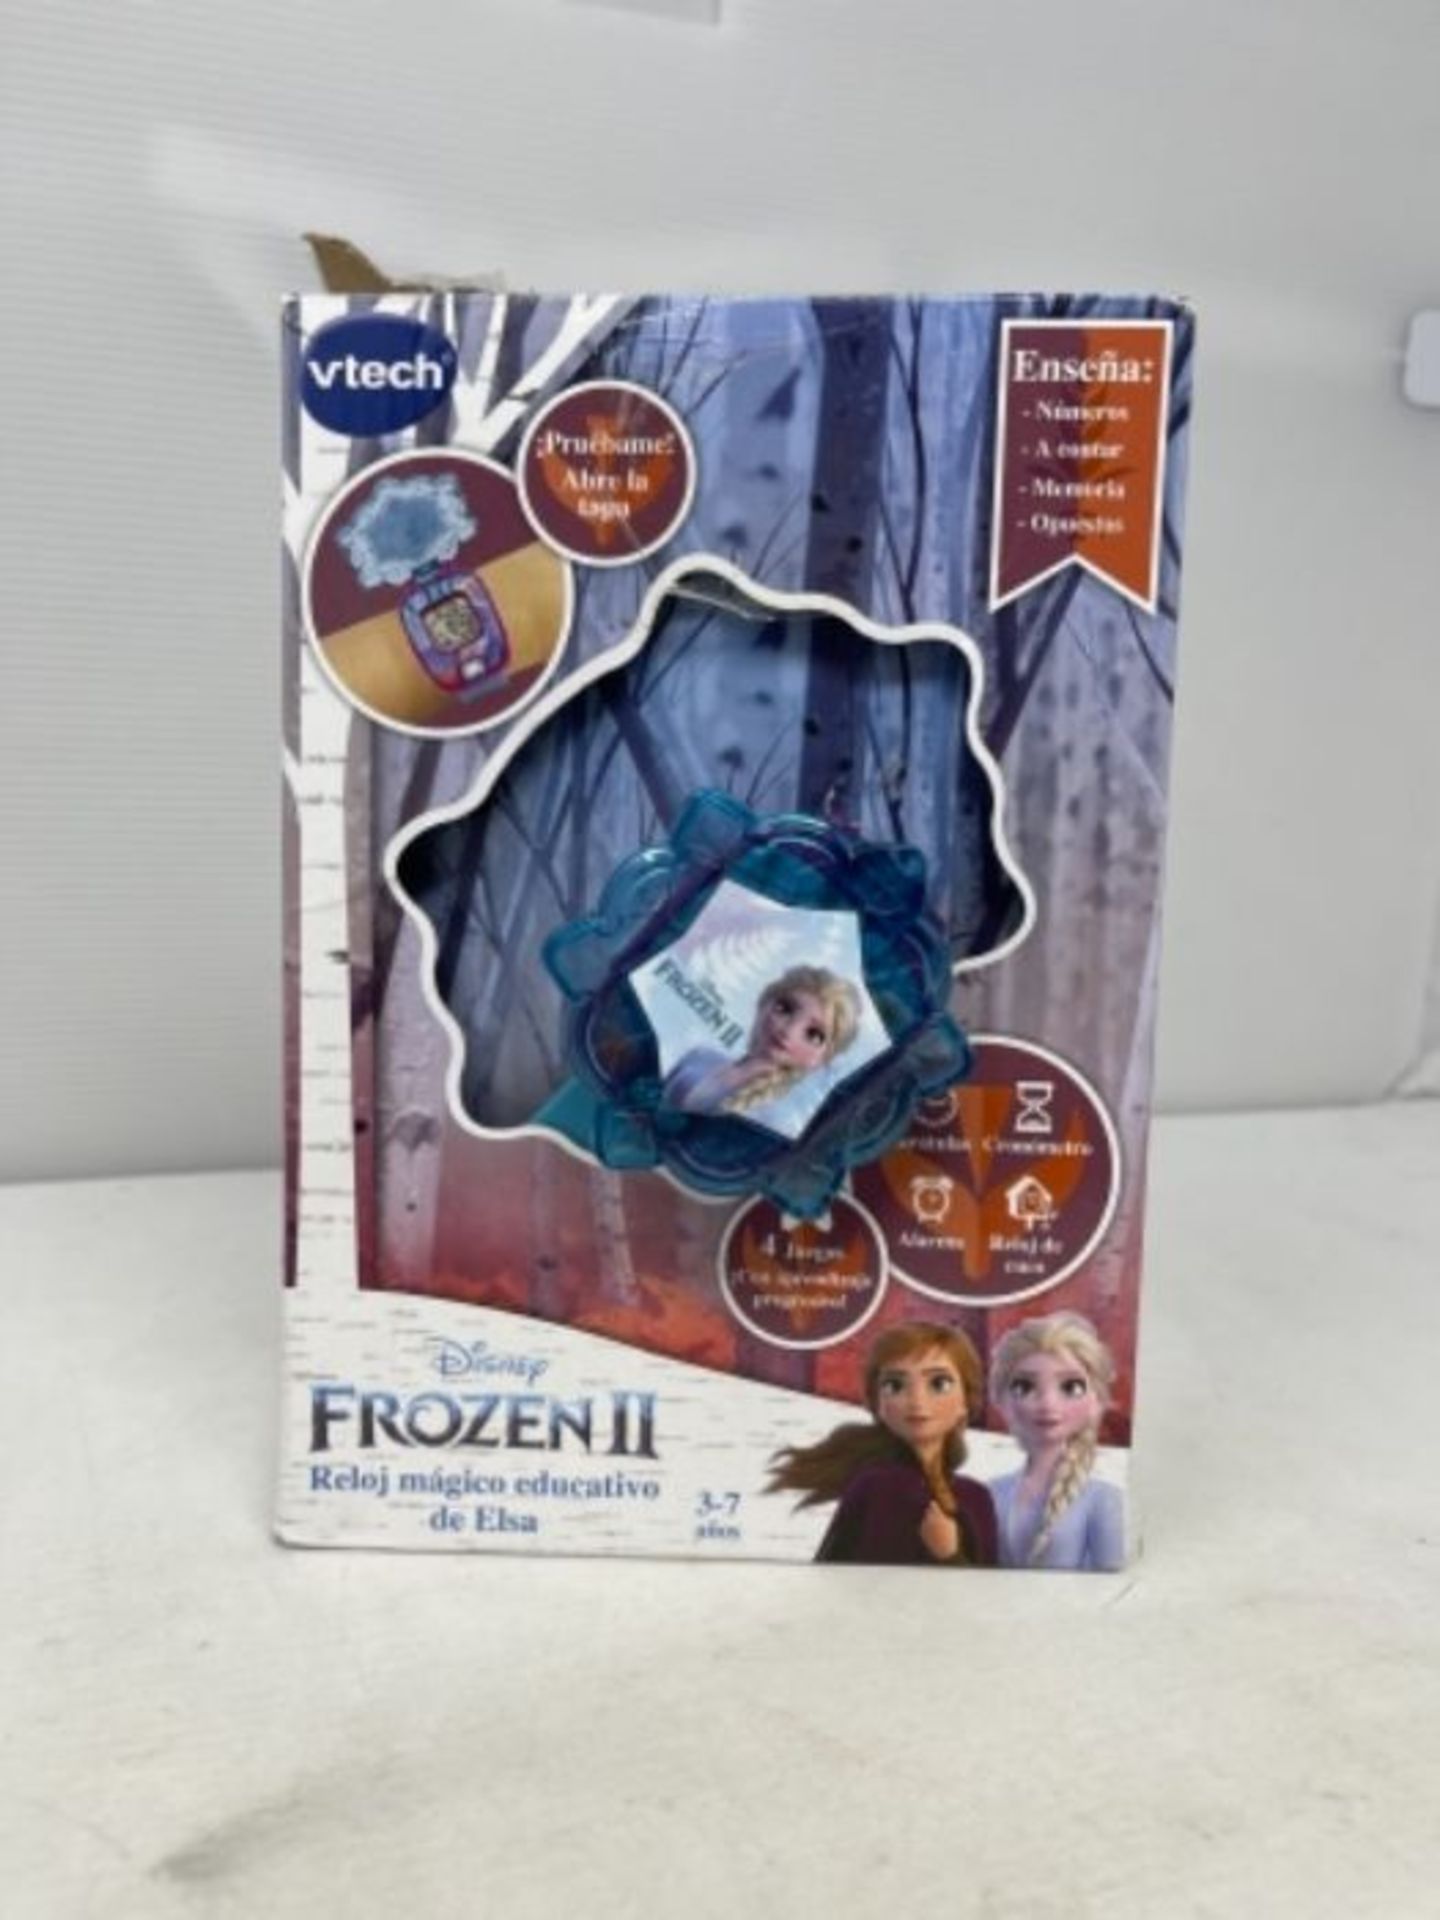 VTech Frozen 2 Digital Watch (Anna and Elsa). 3480-518822 - Spanish version - Image 3 of 3